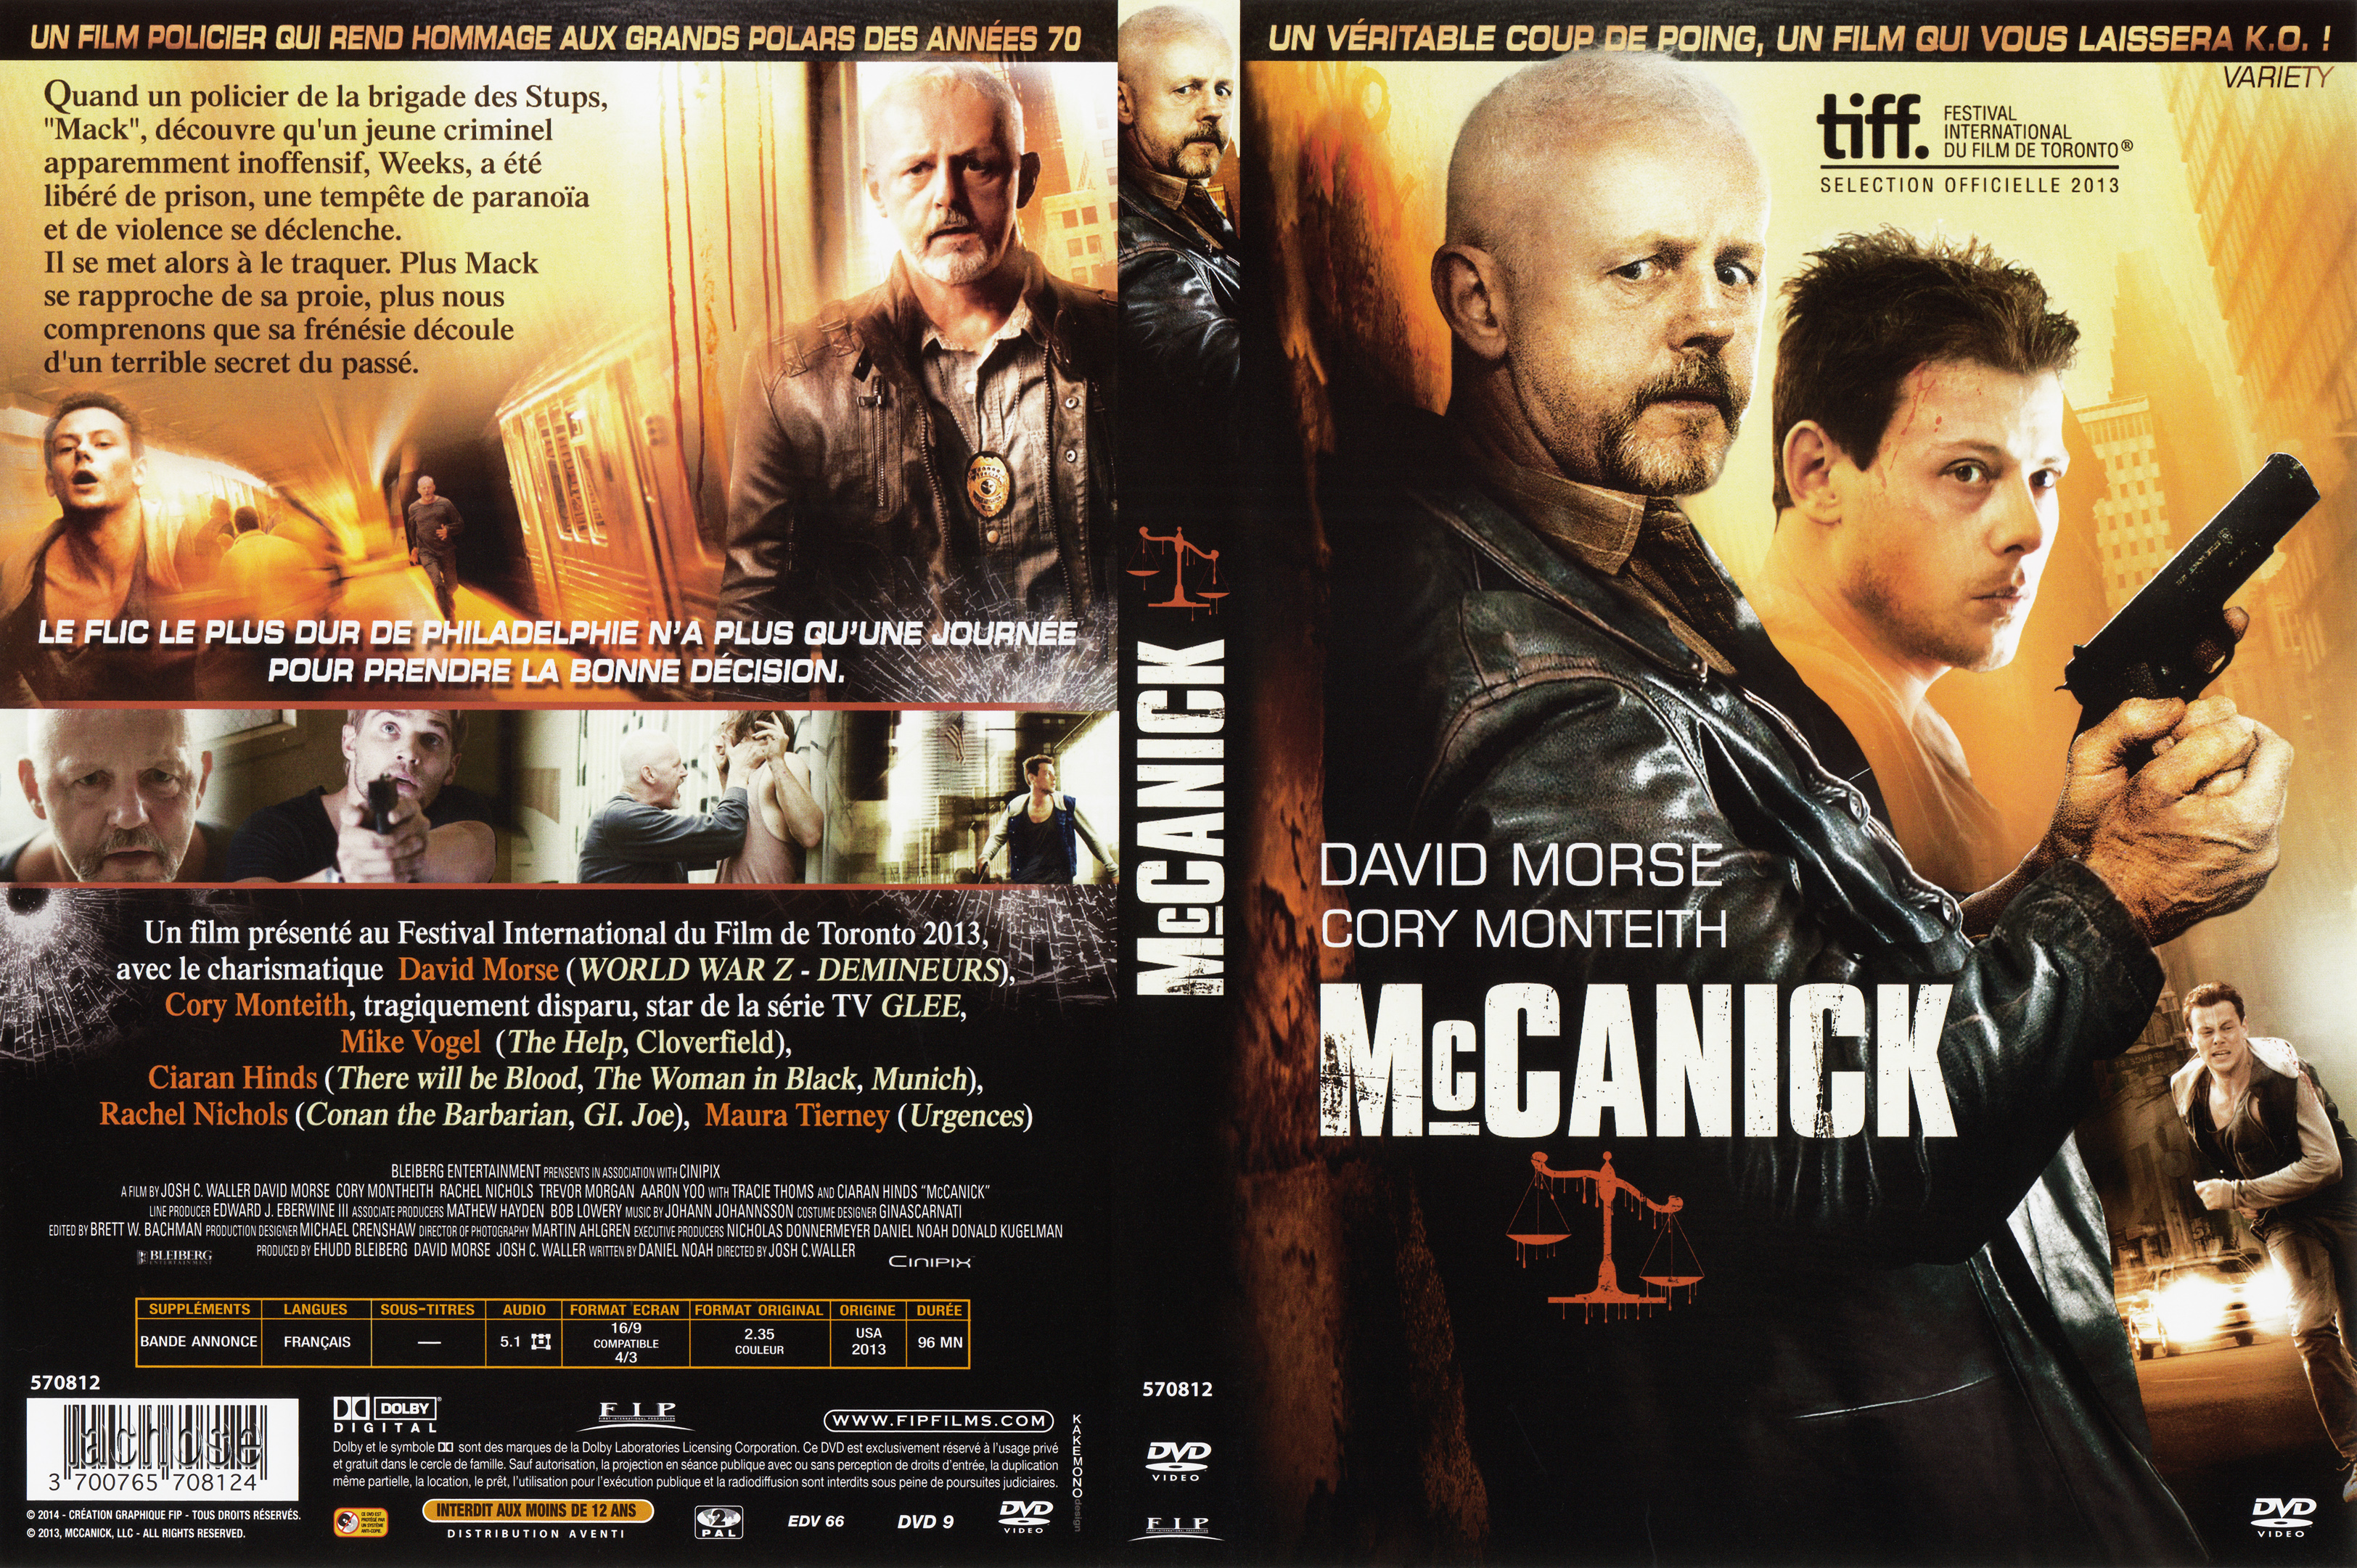 Jaquette DVD McCanick